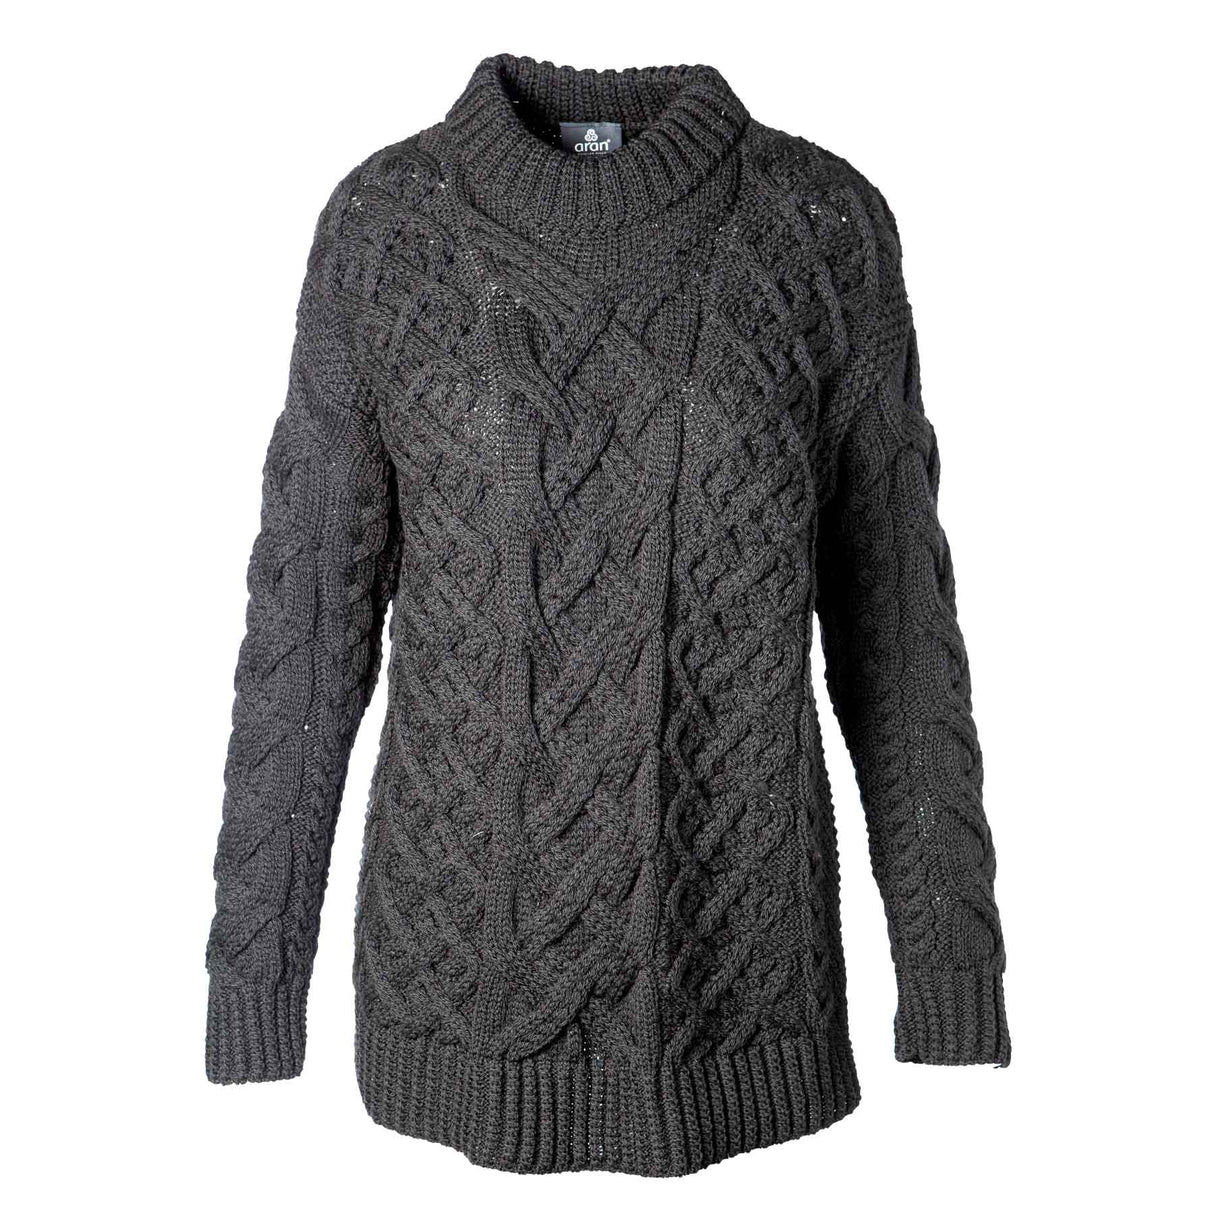 Oversized Aran Knit Sweater, Black - Creative Irish Gifts